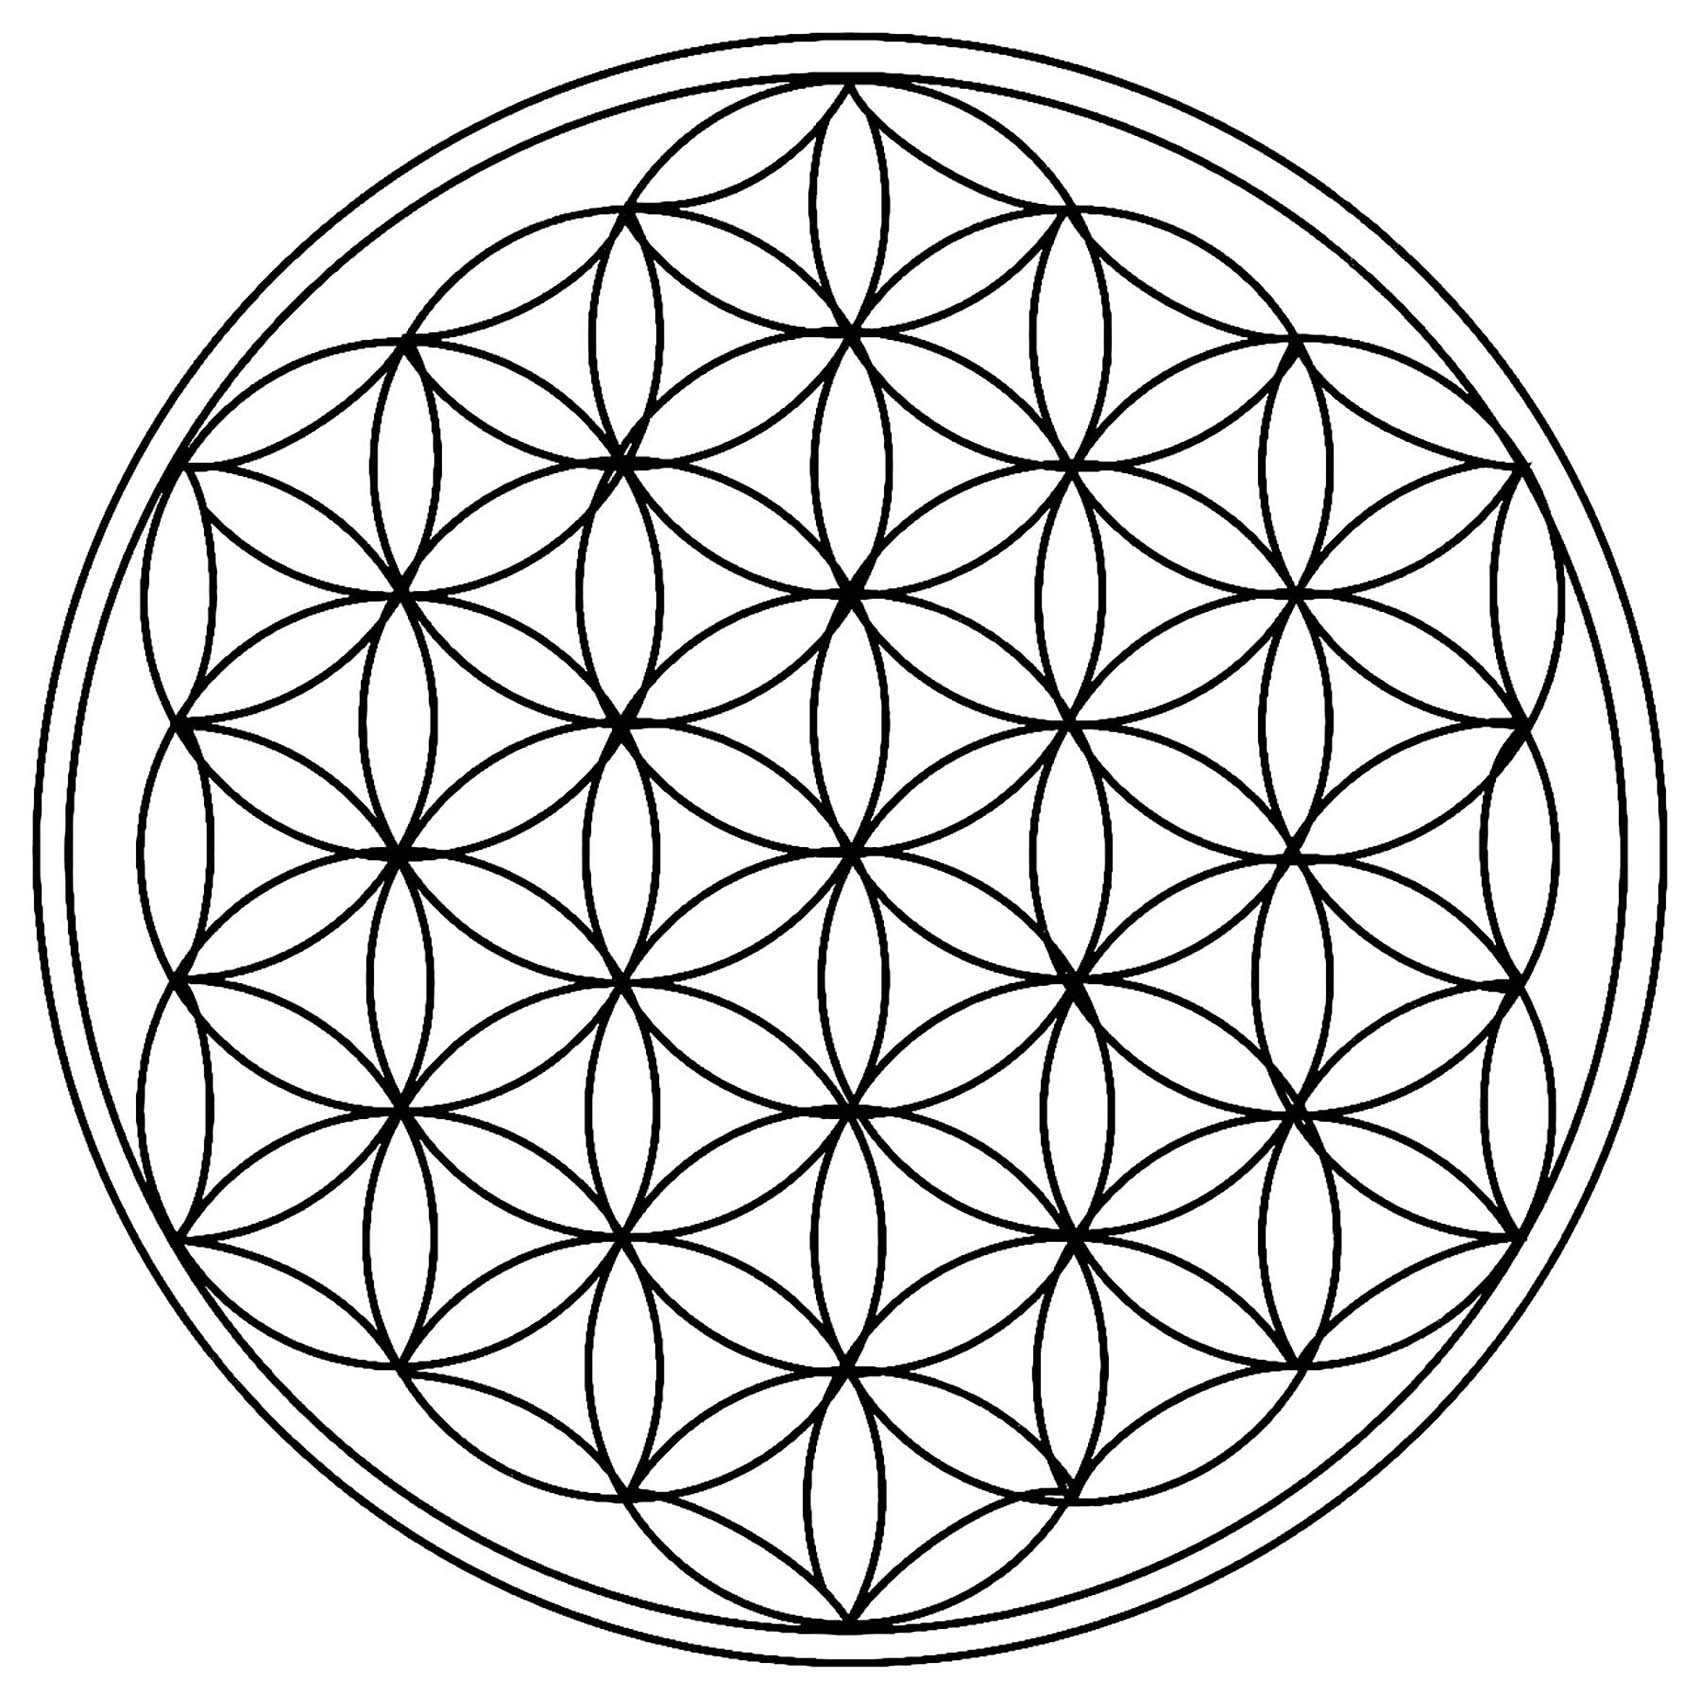 Look closely, this mandala is made of circles!